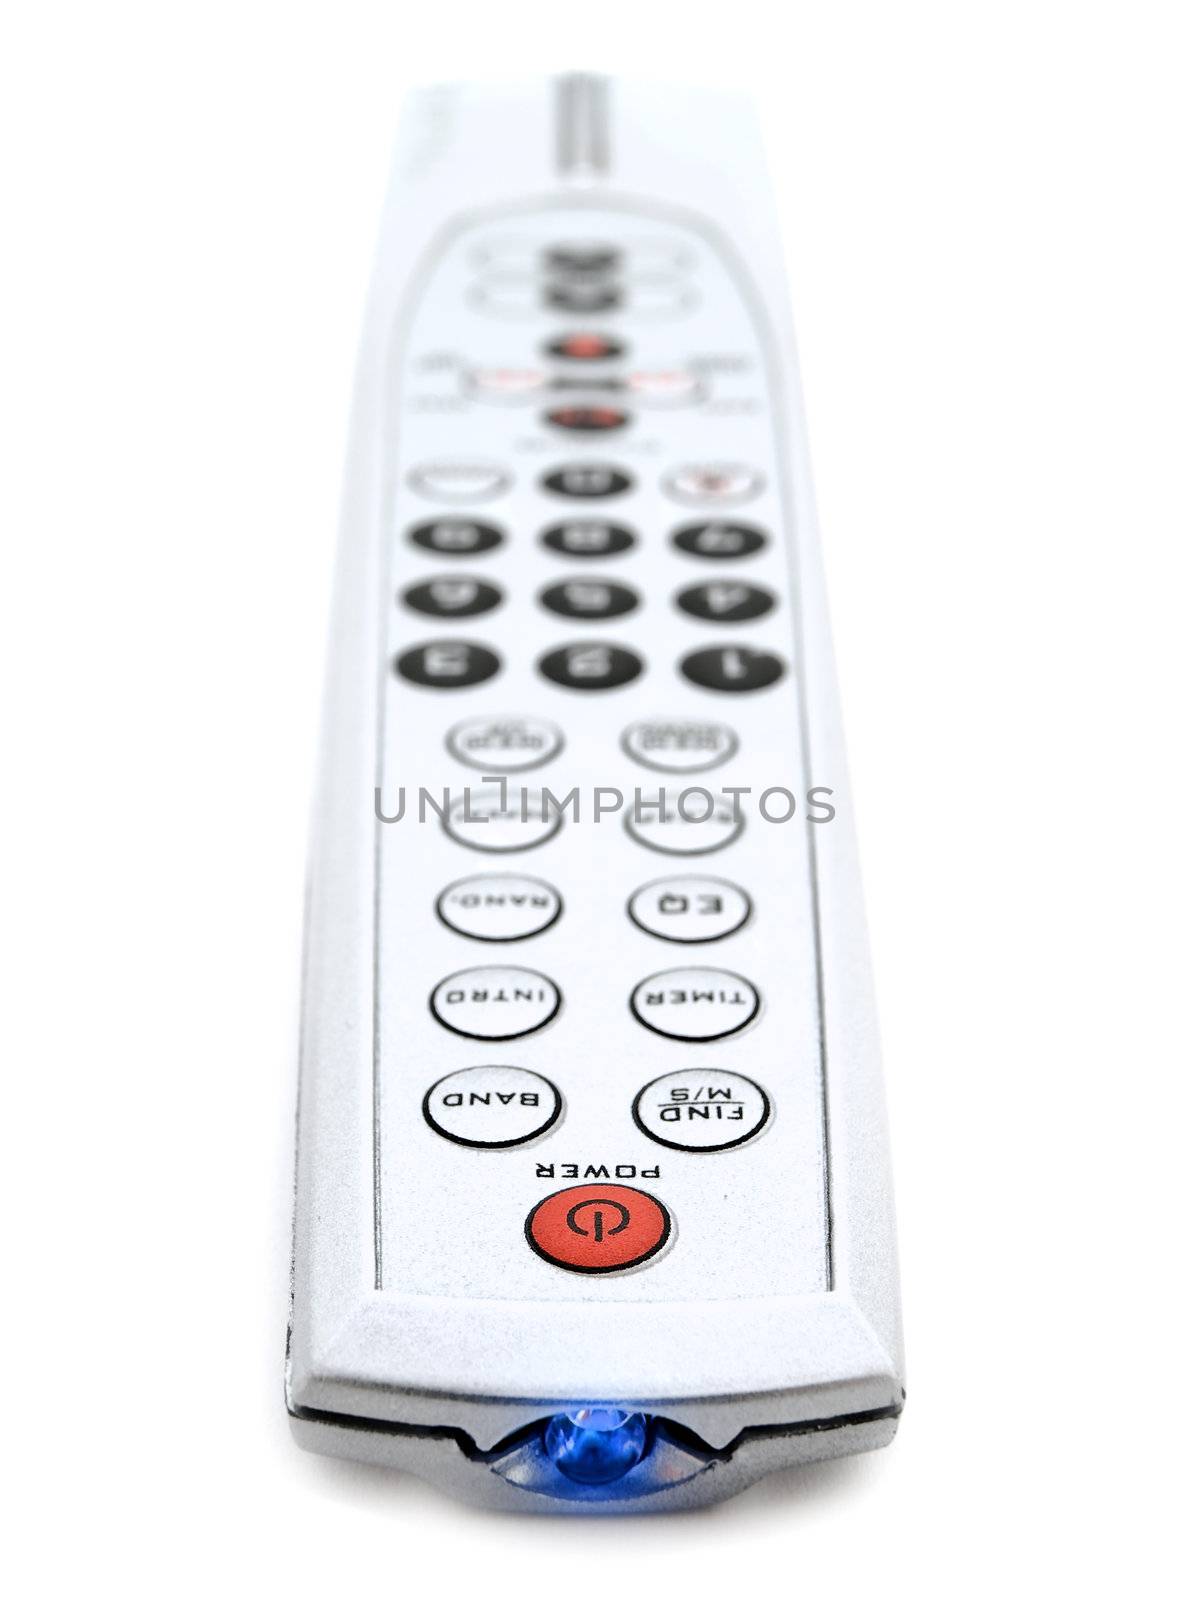 remote control by SNR